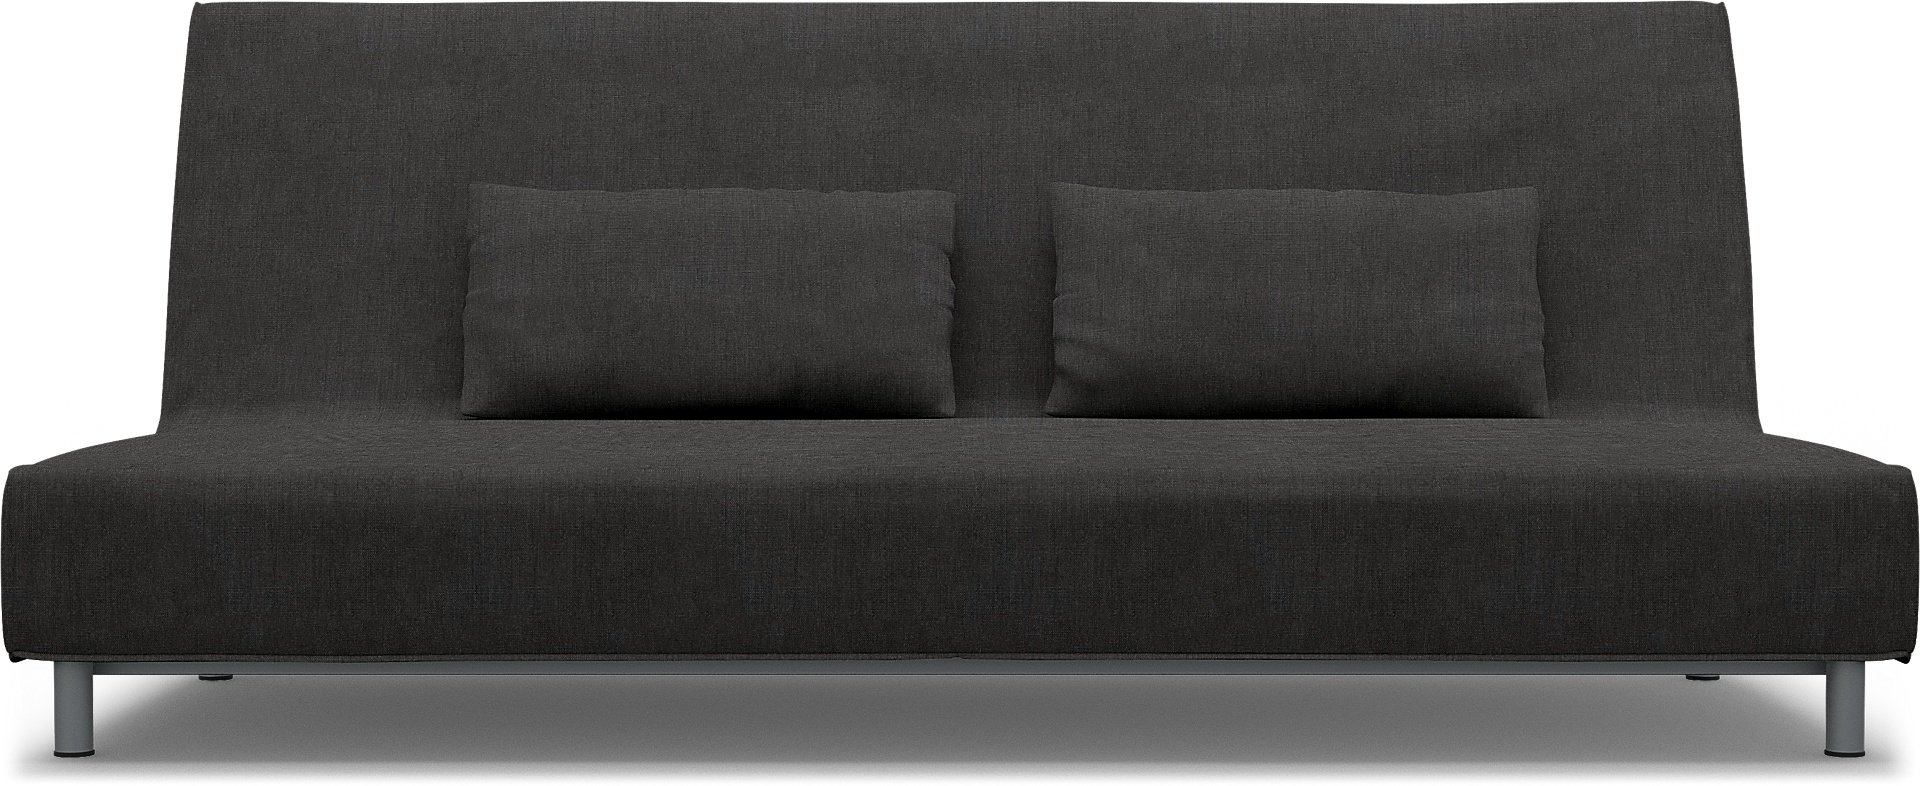 IKEA - Beddinge Sofa Bed Cover, Espresso, Linen - Bemz